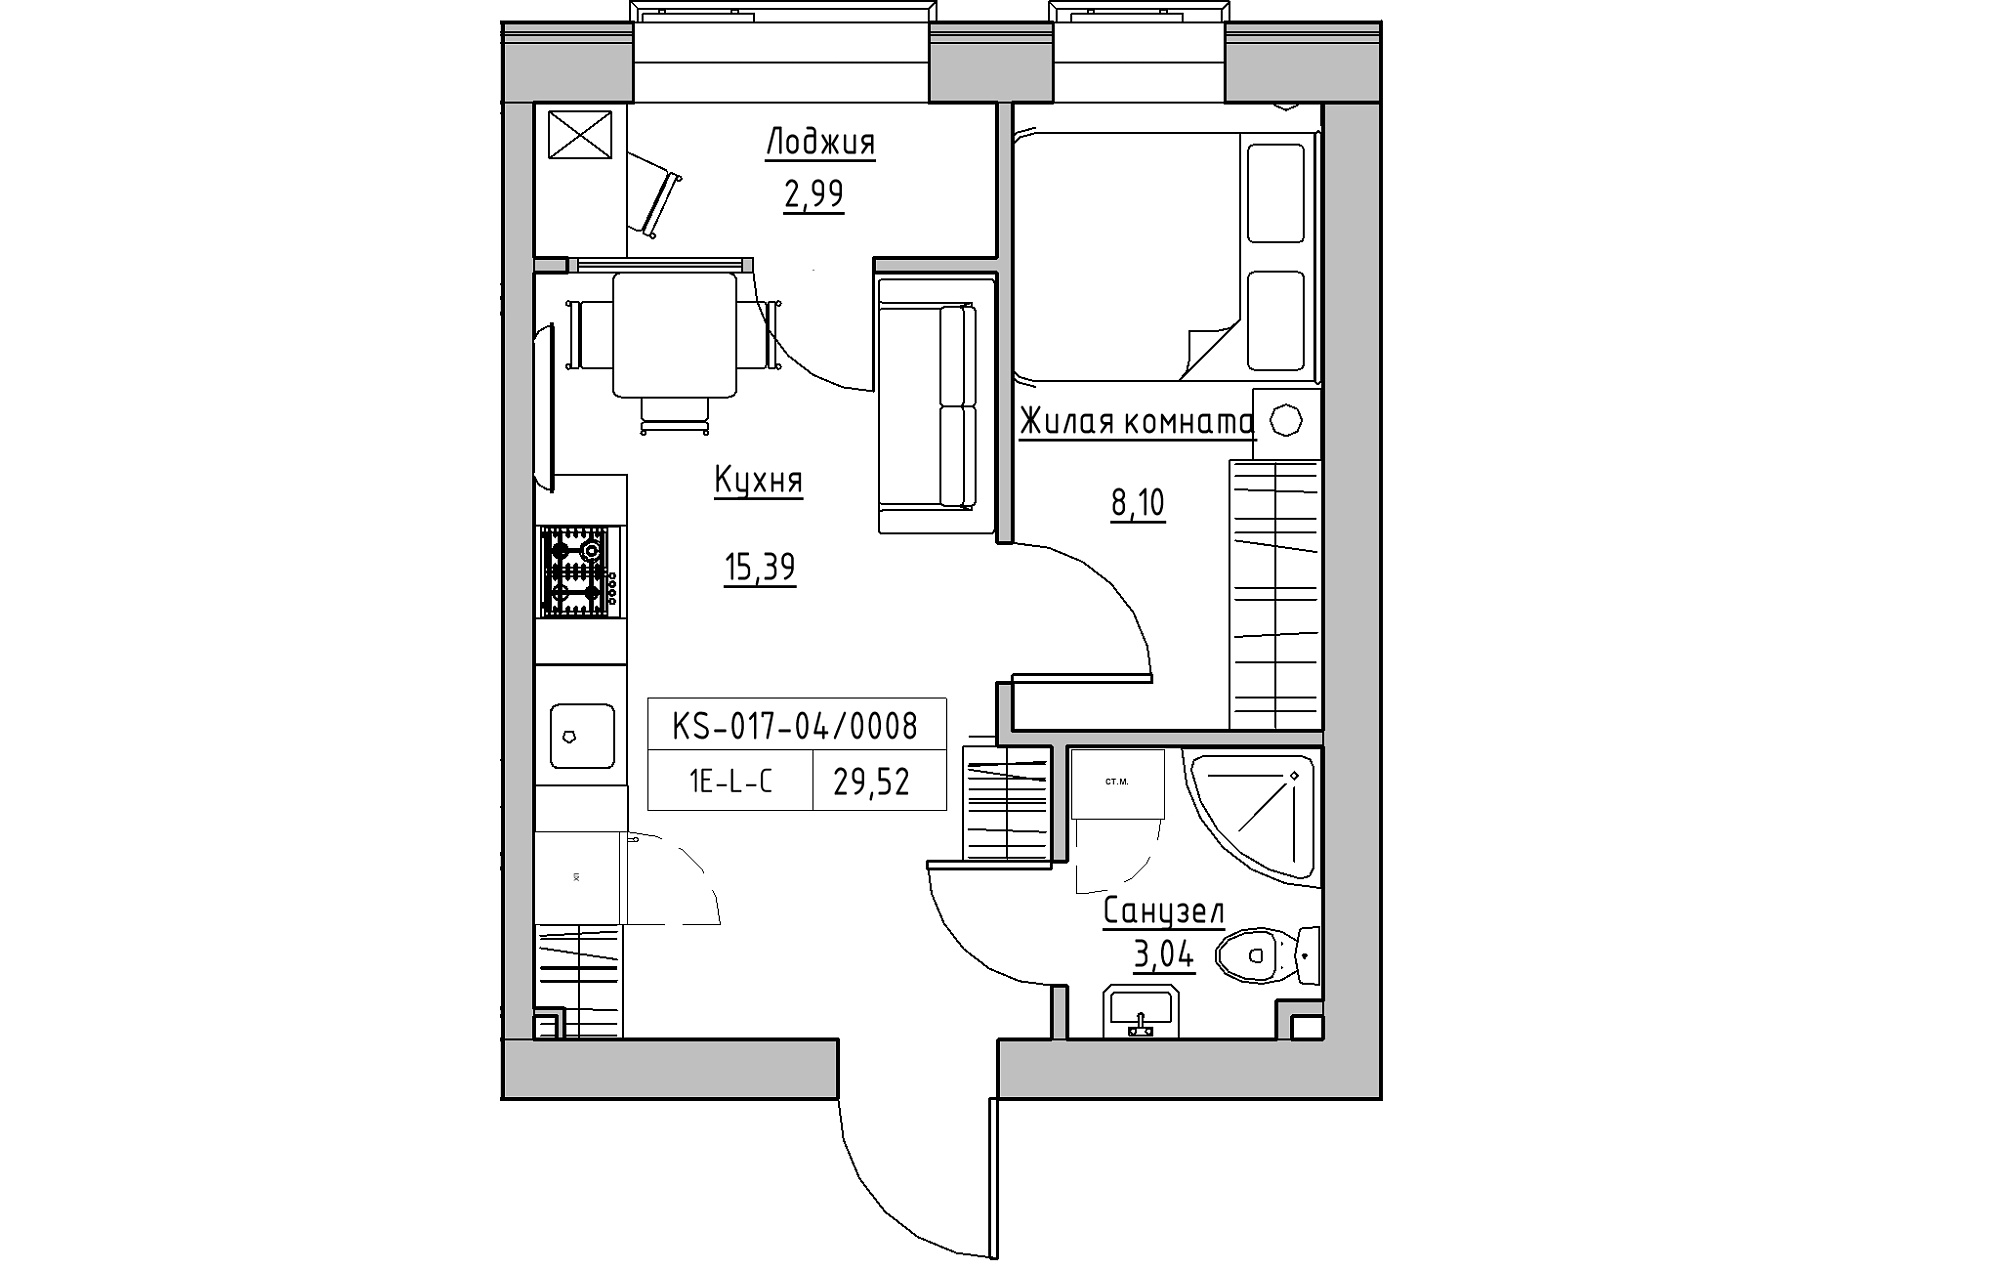 Planning 1-rm flats area 29.52m2, KS-017-04/0008.